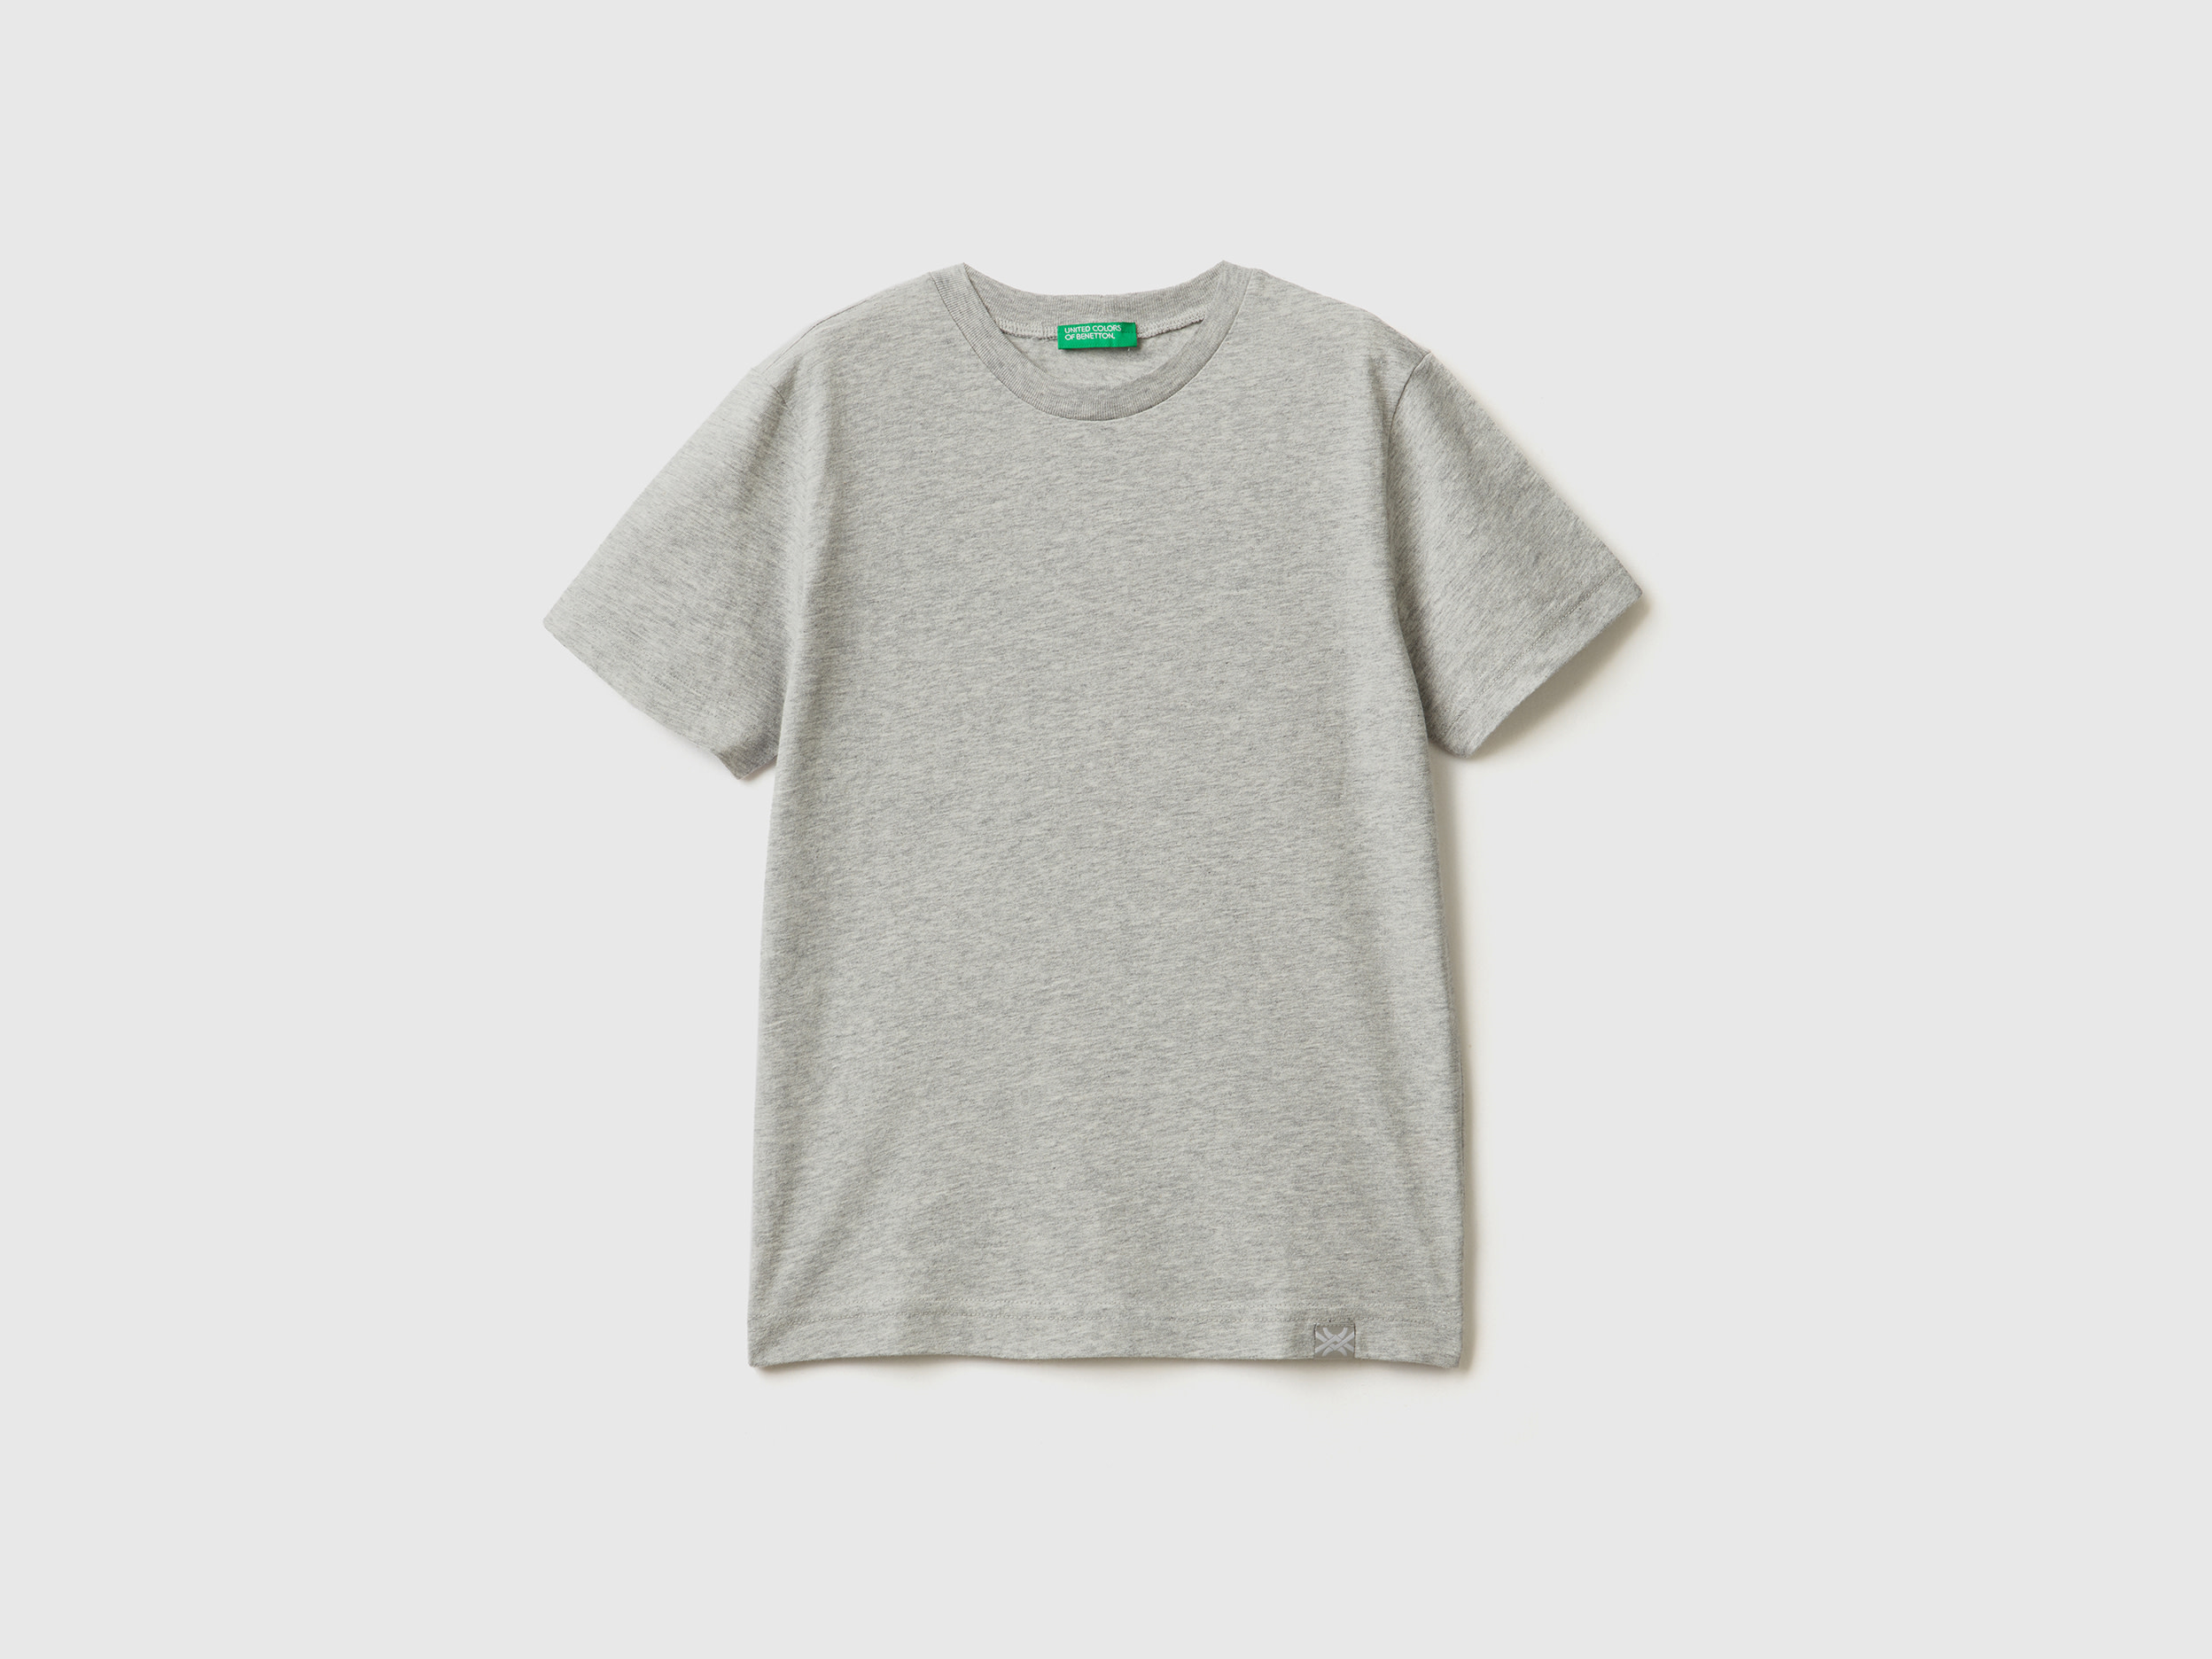 Image of Benetton, Organic Cotton T-shirt, size 2XL, Light Gray, Kids